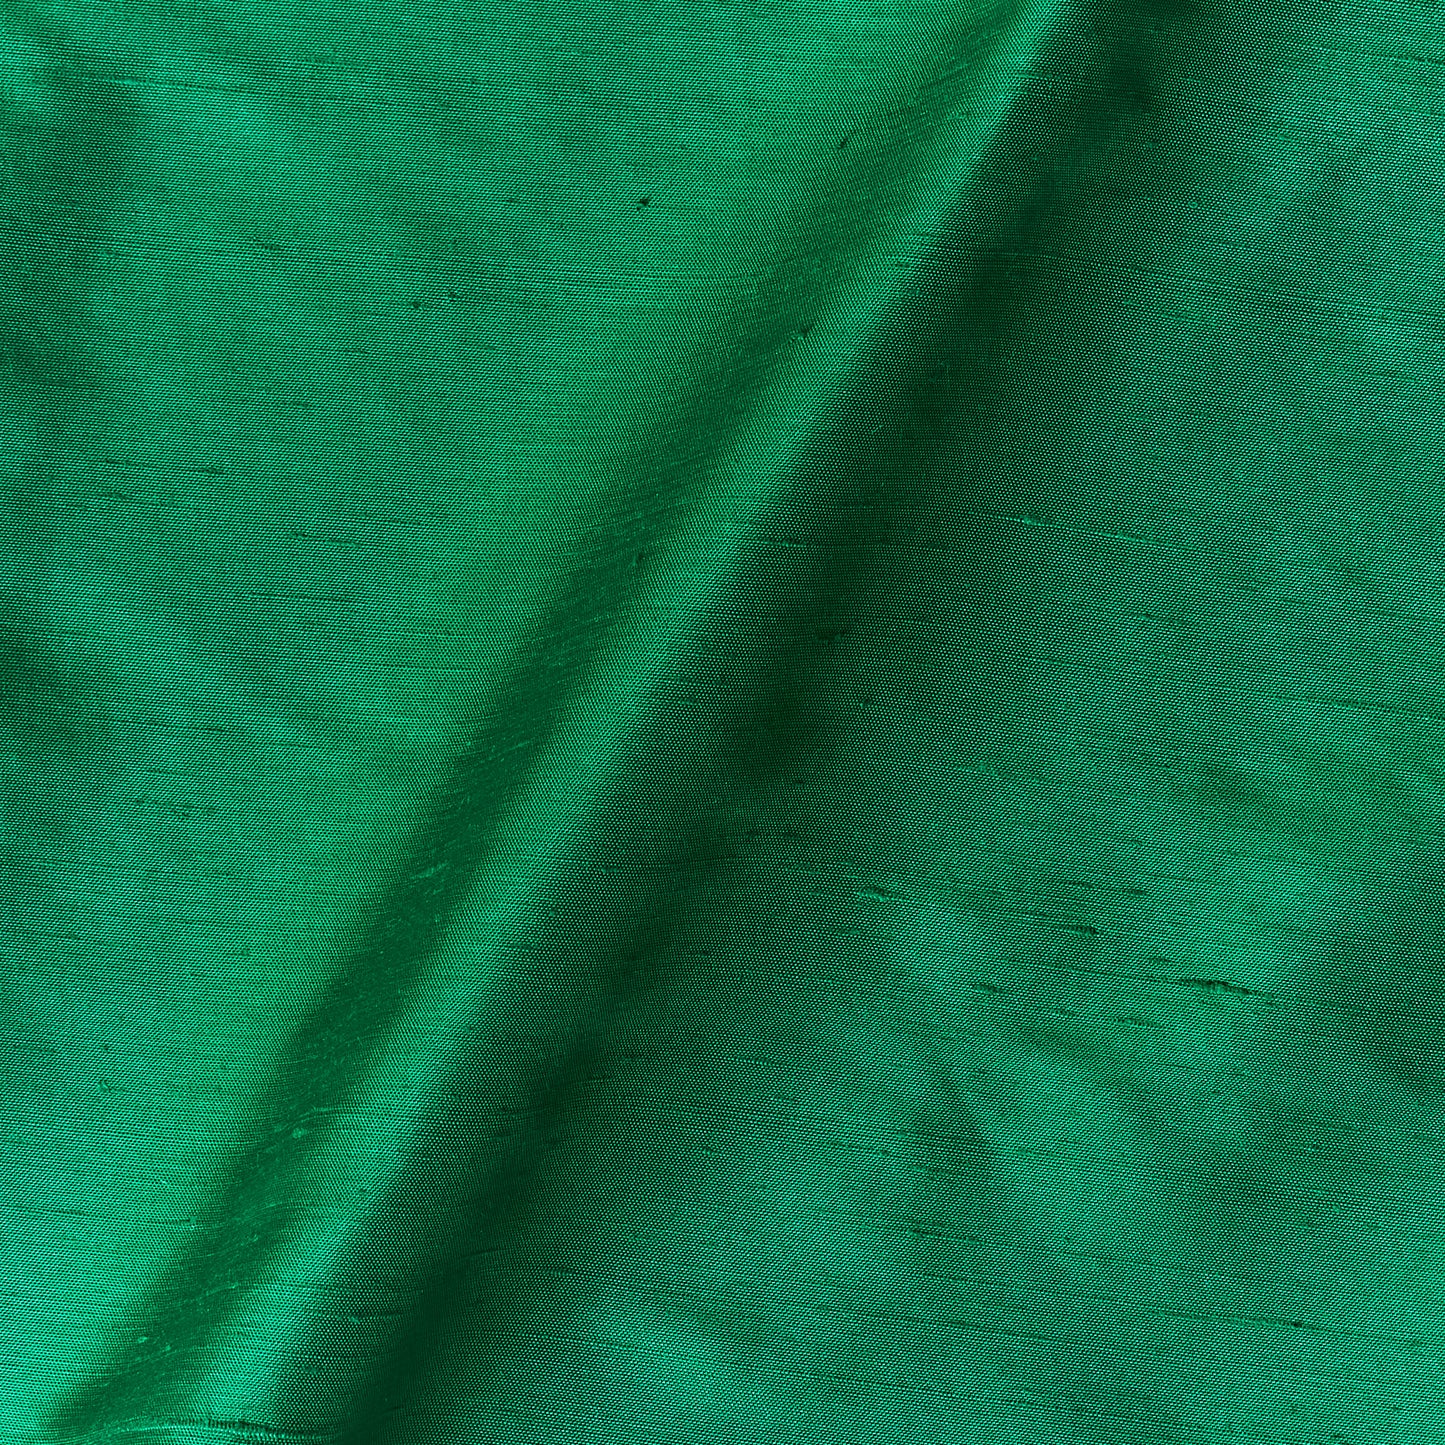 Showing Bohai Dupion pure silk in an emerald shade with moderate drape